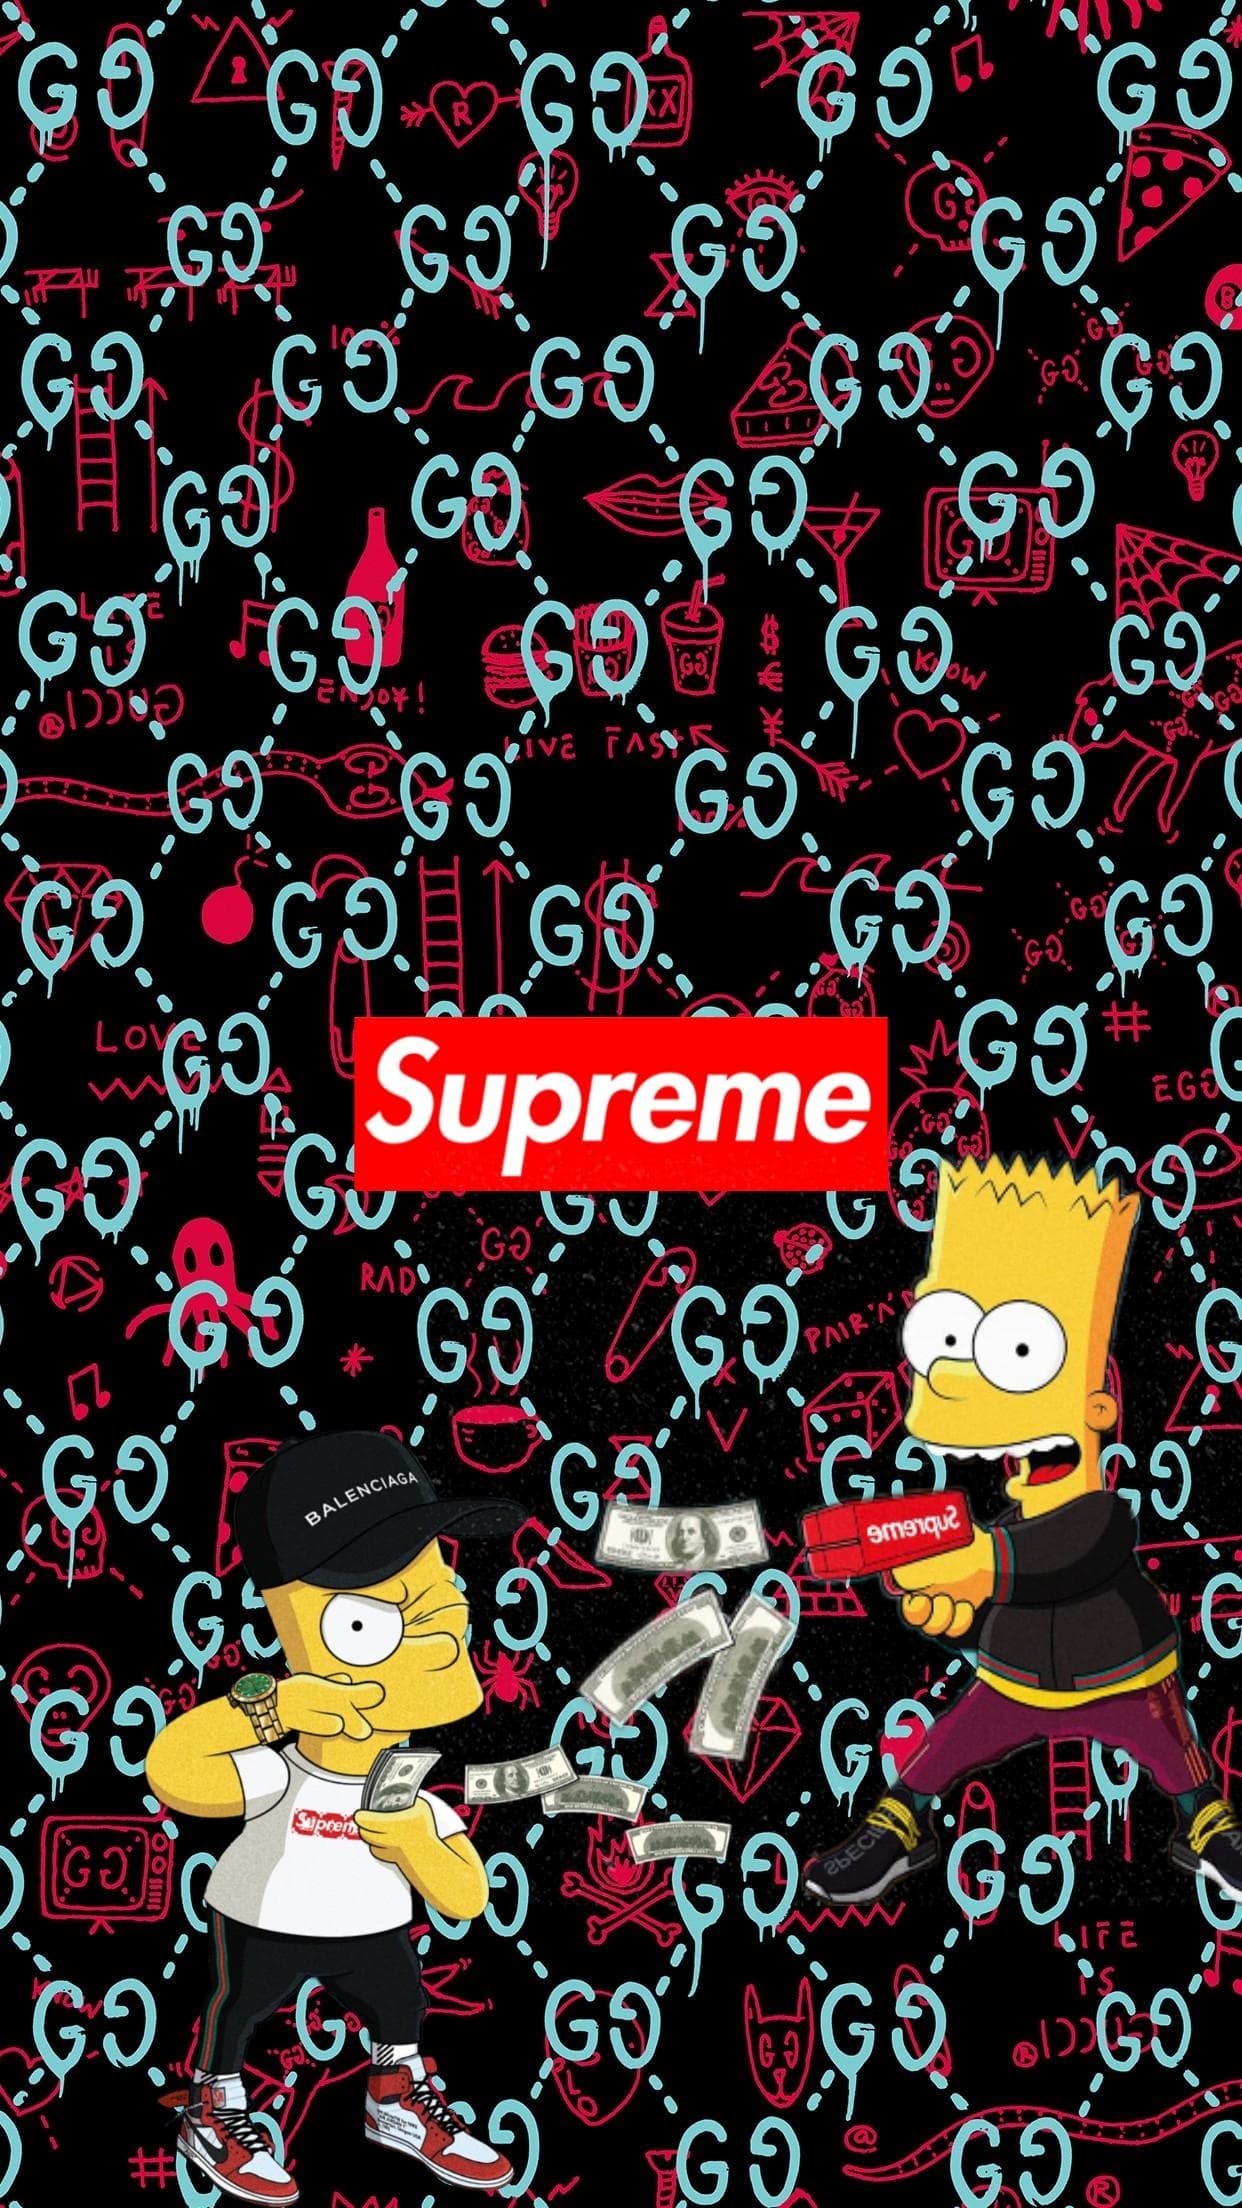 Supreme Wallpaper - NawPic